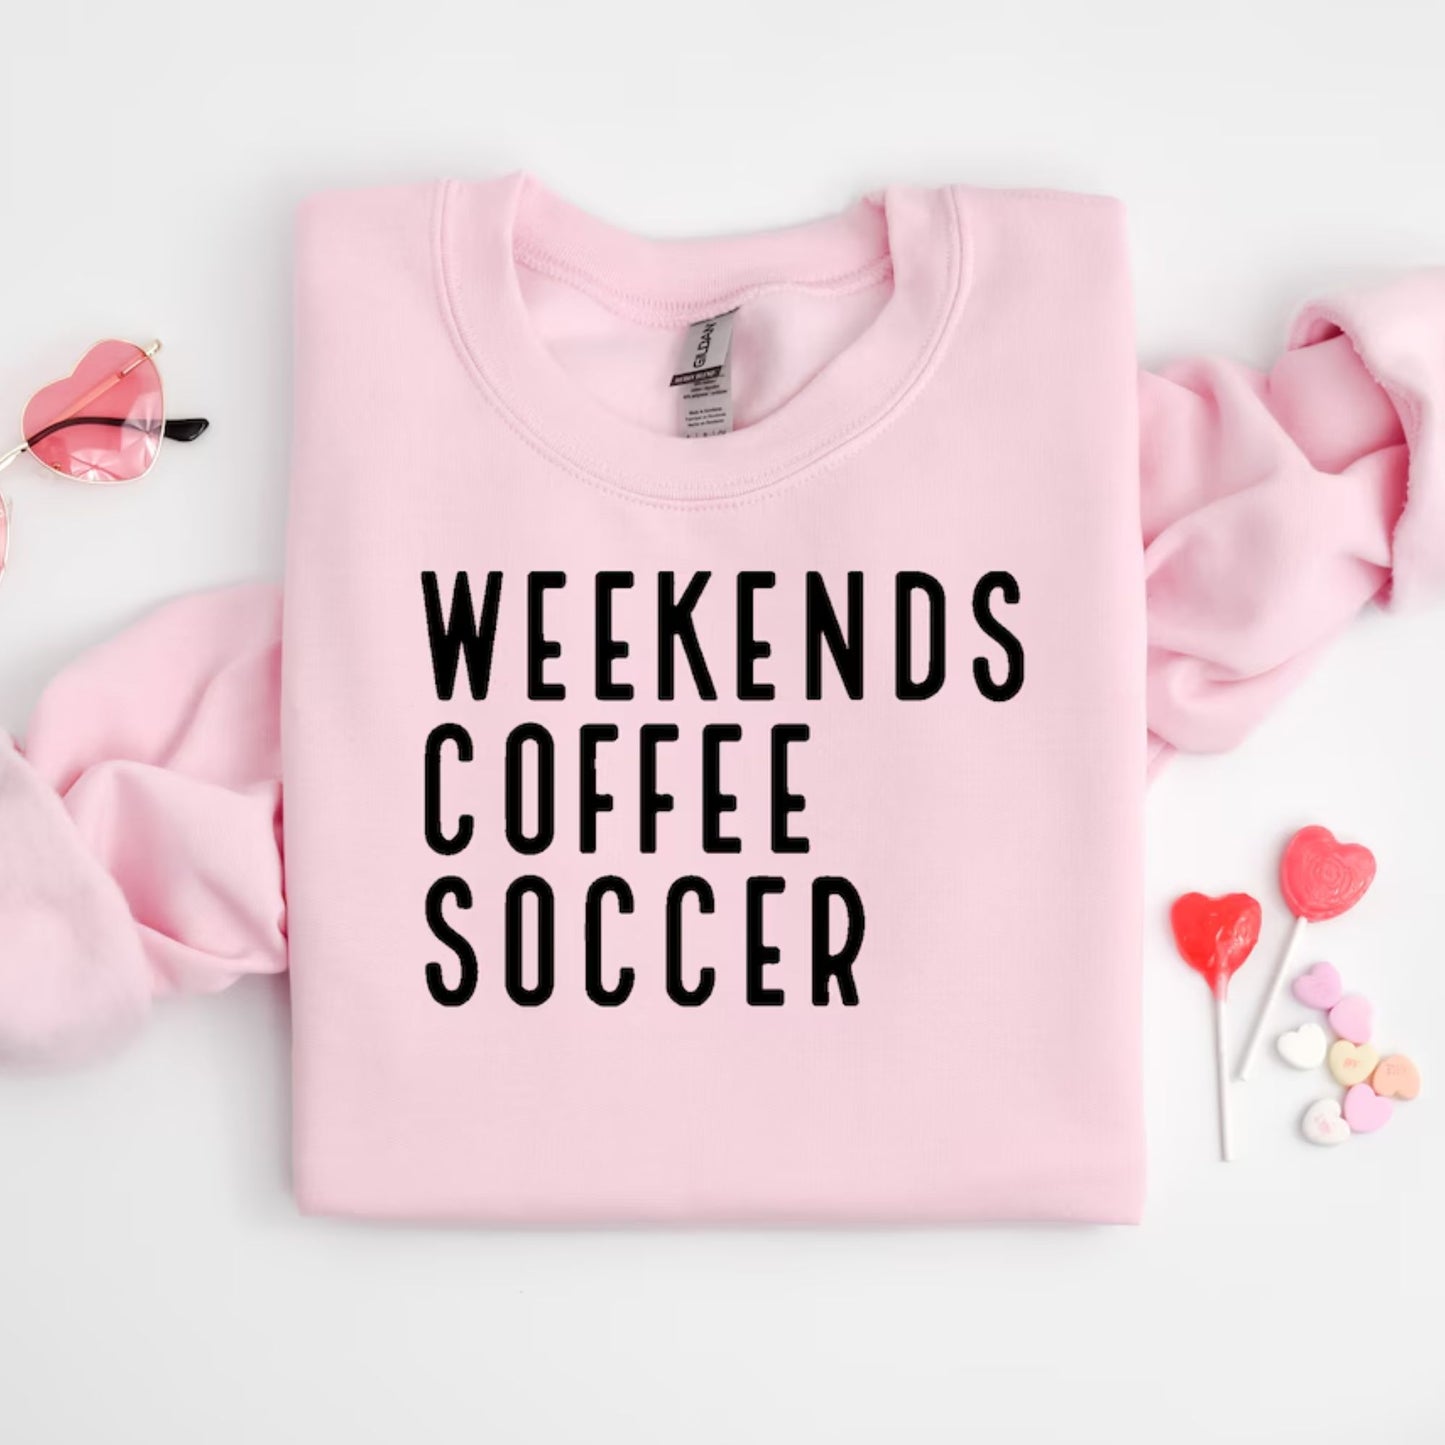 Weekend Coffee Soccer Sweatshirt and Shirts, Soccer Mom Gift